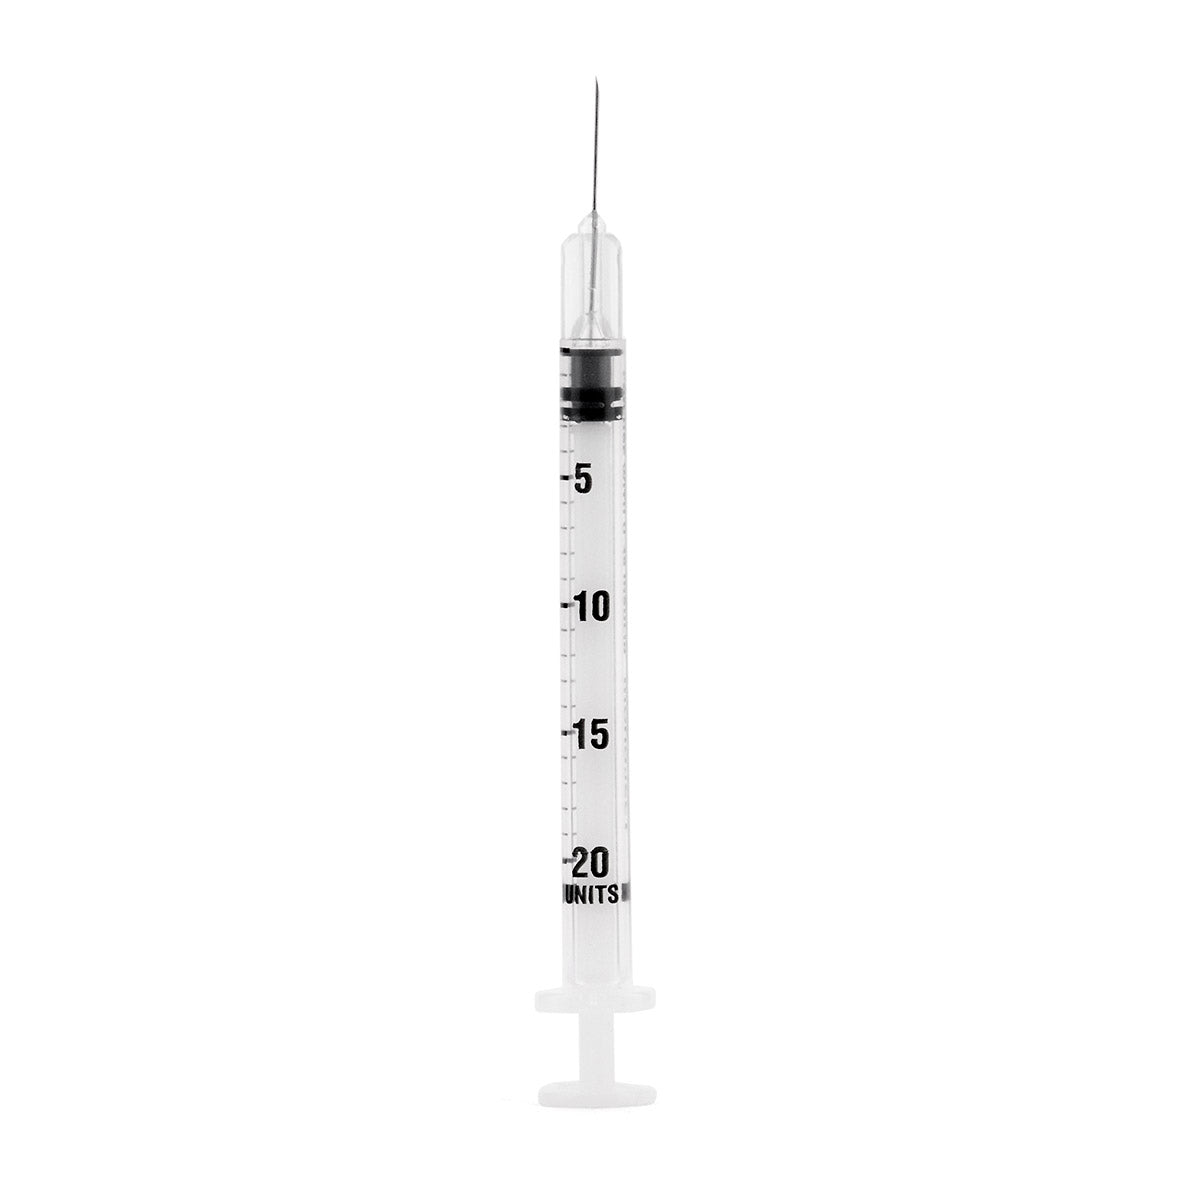 Caninsulin 40unit Syringes